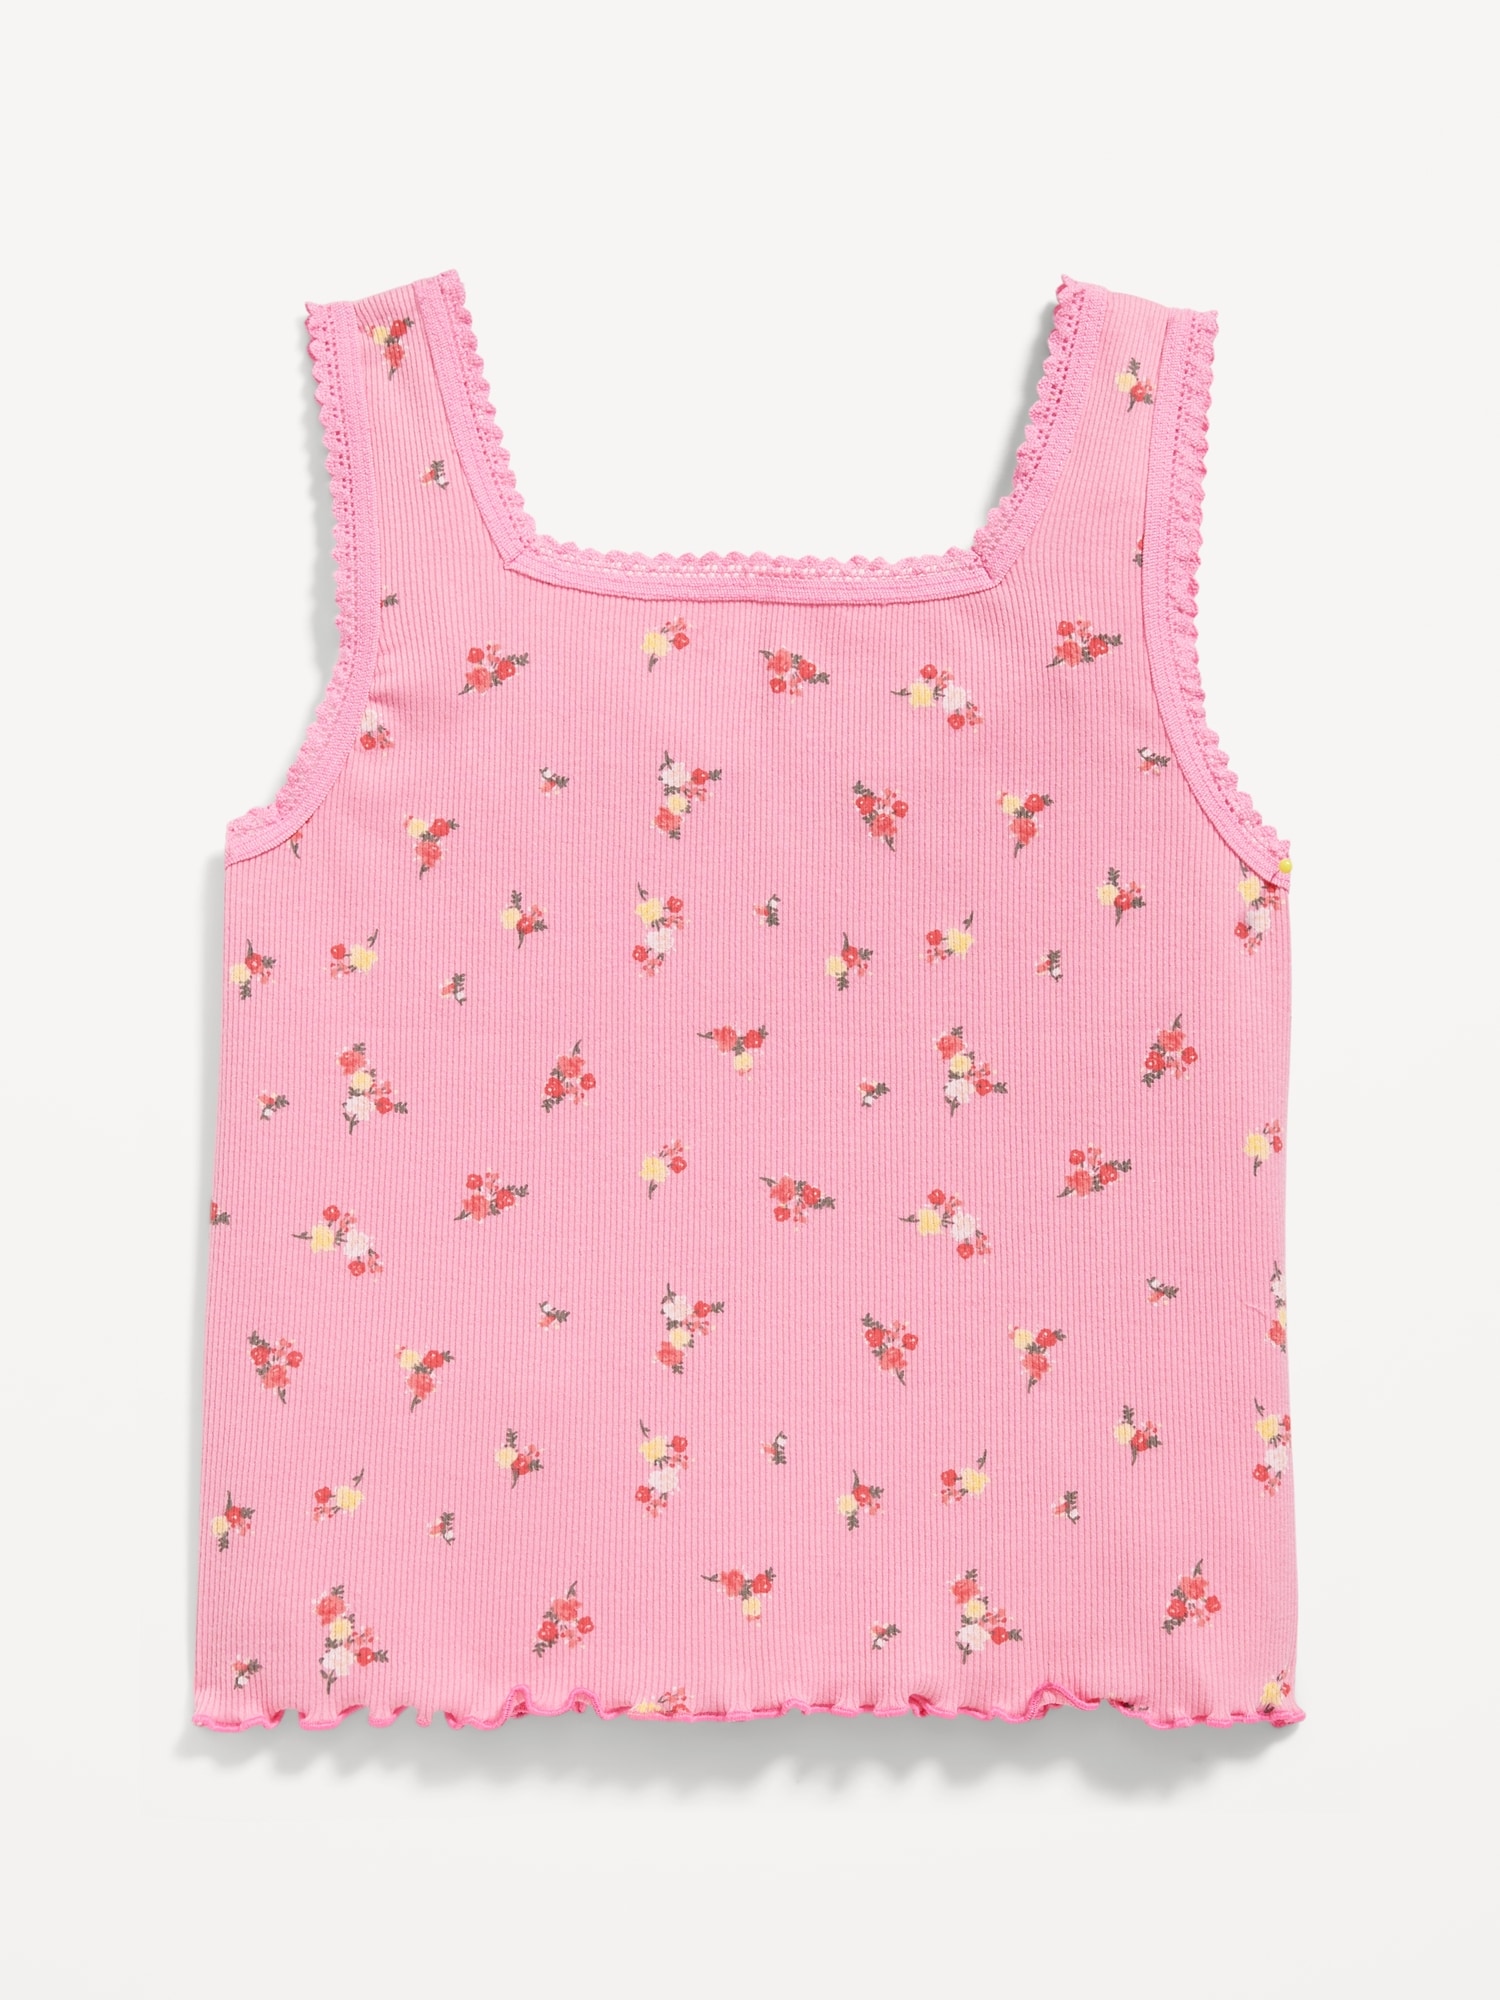 Unbranded Tank Top Shirt Girls XL Extra Large Pink Black Lace Trim